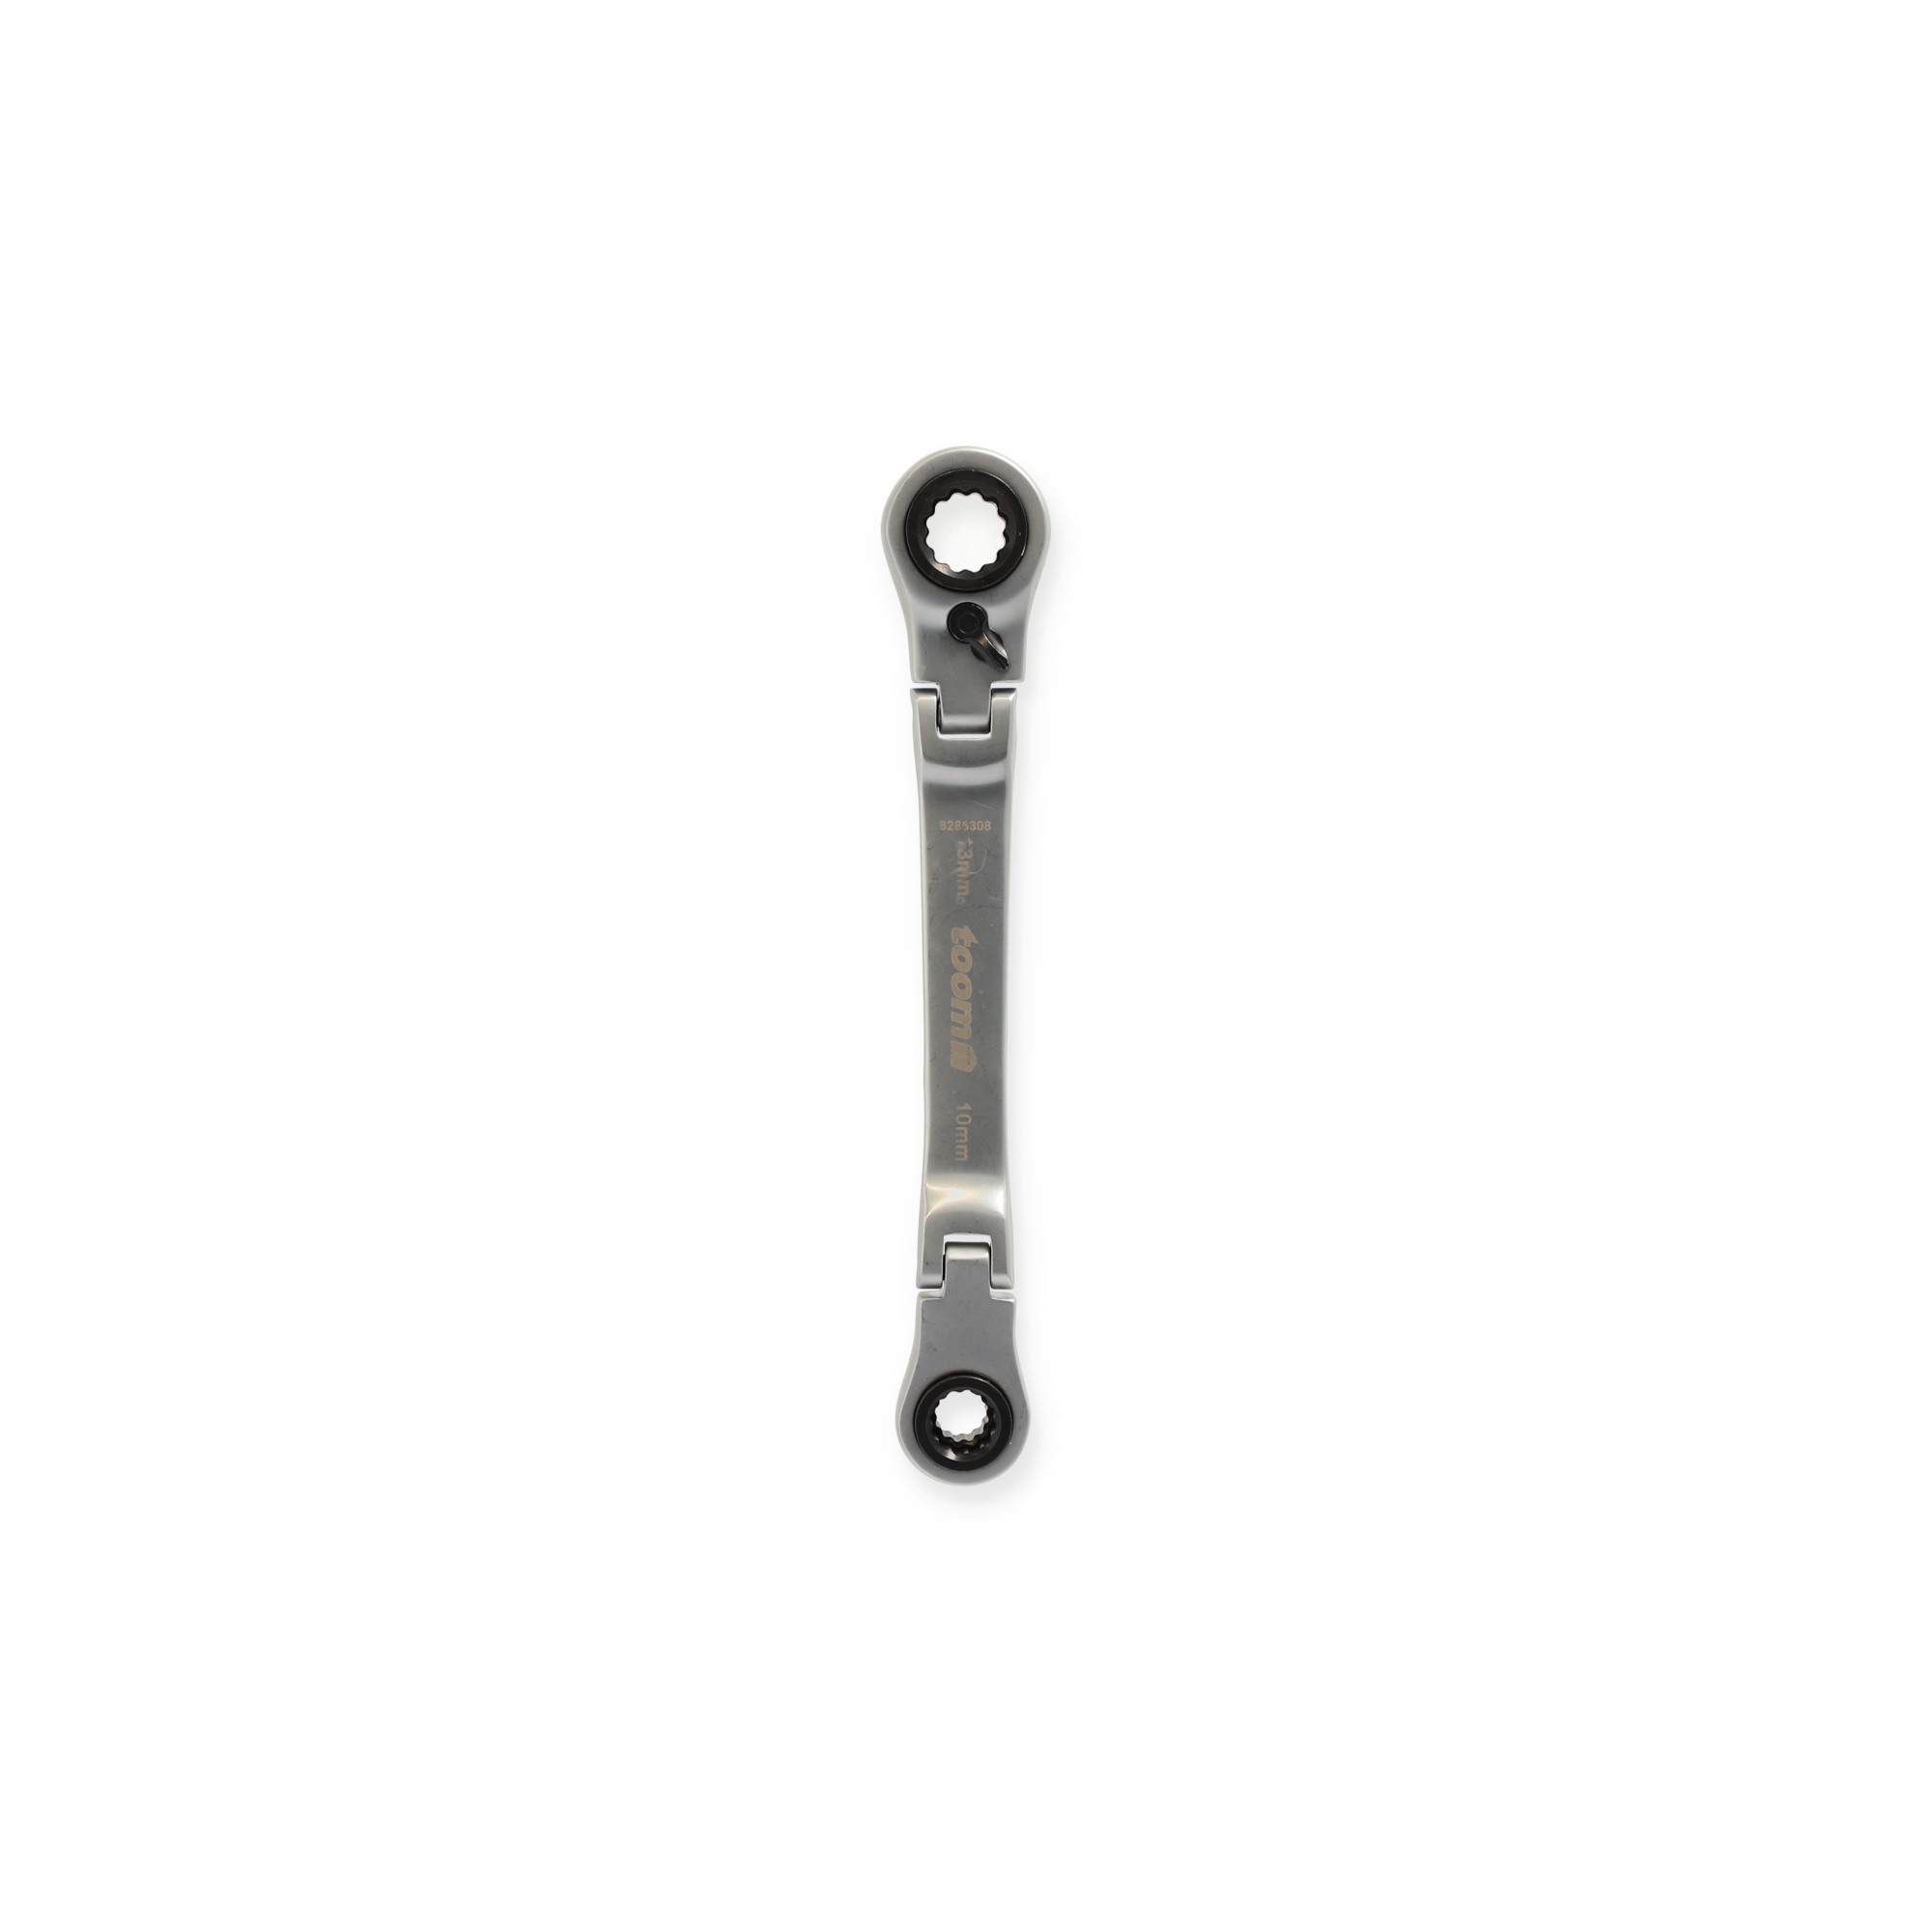 Ratschenschlüssel 8-19 mm 2-teilig + product picture